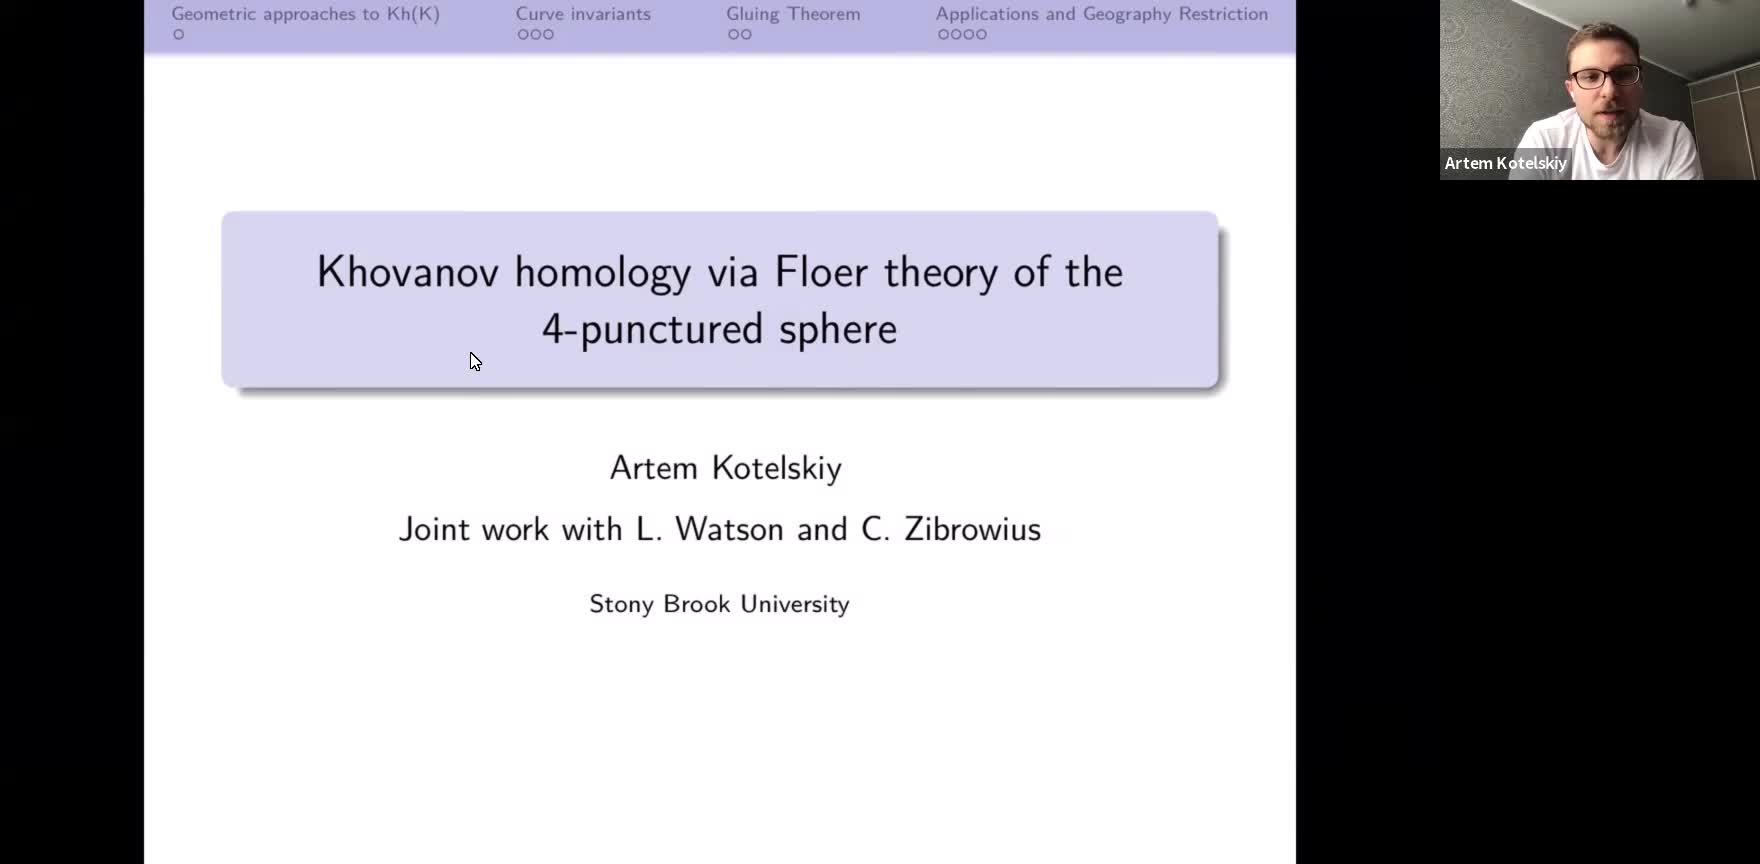 PQLHT | Conference Talk 4 by Artem Kotelskiy: "Khovanov homology via Floer theory of the 4-punctured sphere"